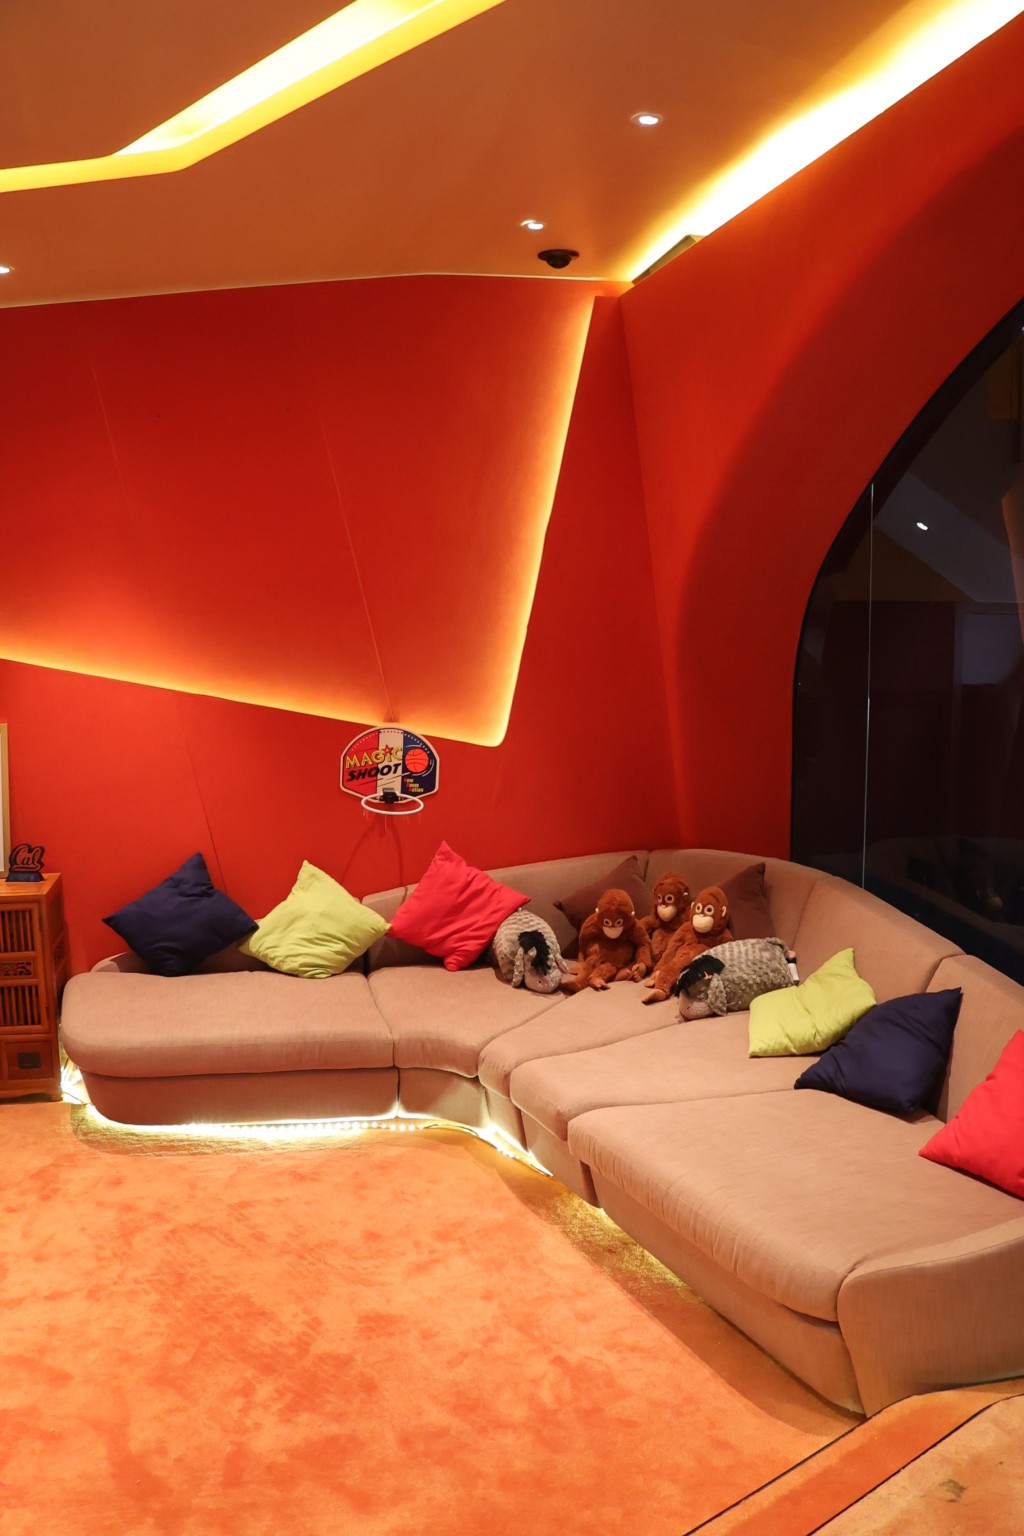 Russell三兄弟的睡房採用橙紅色、不規則牆身設計，配合燈光，凸顯摩登型格。